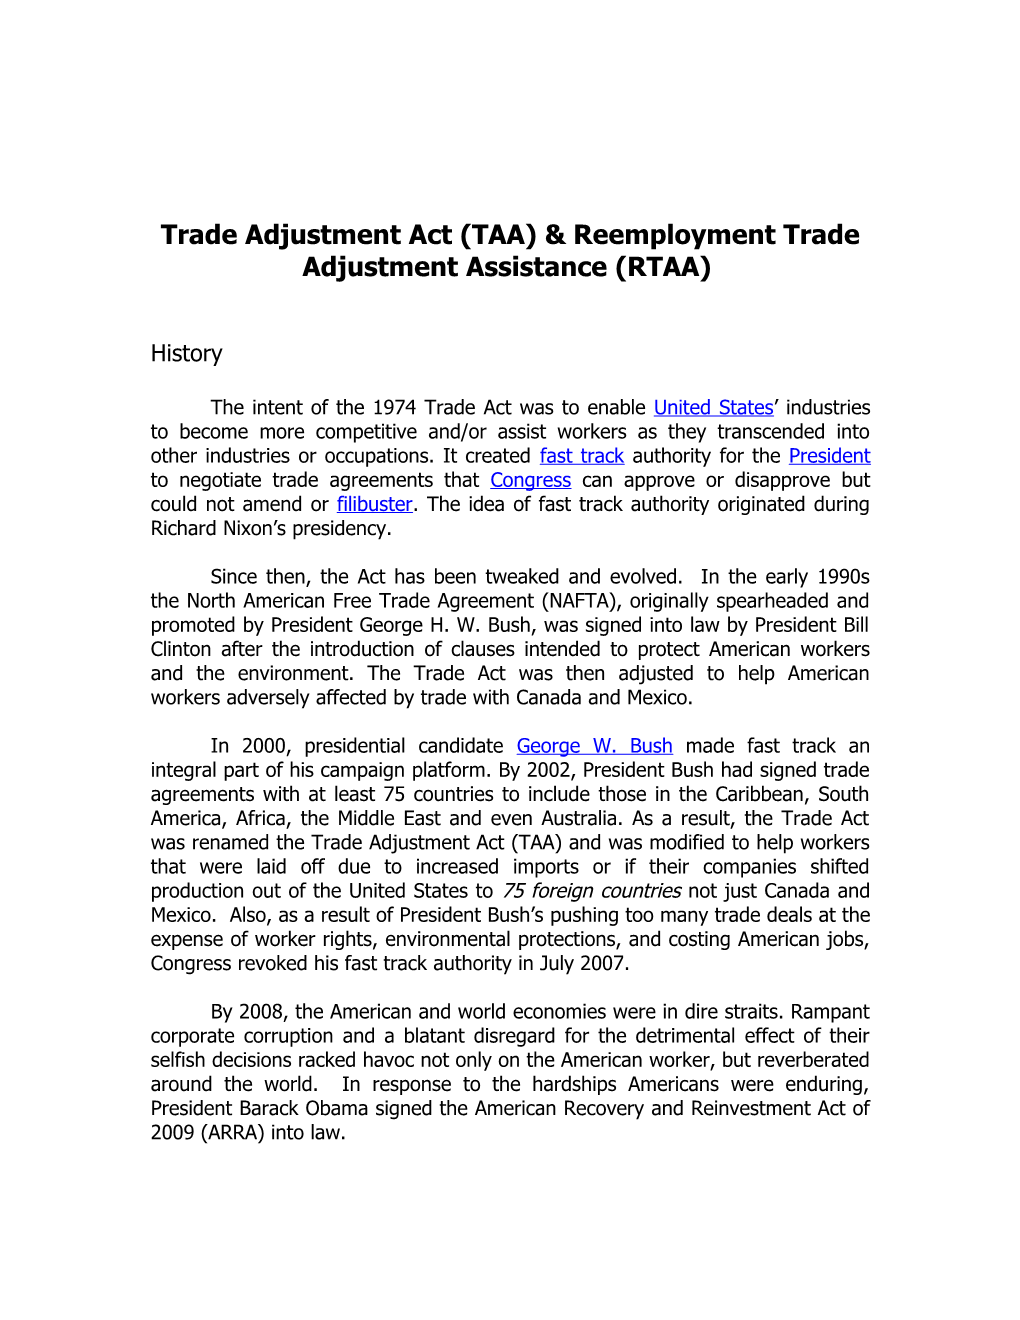 Trade Adjustment Act (TAA) & Alternative Trade Adjustment Assistance (ATAA) Overview